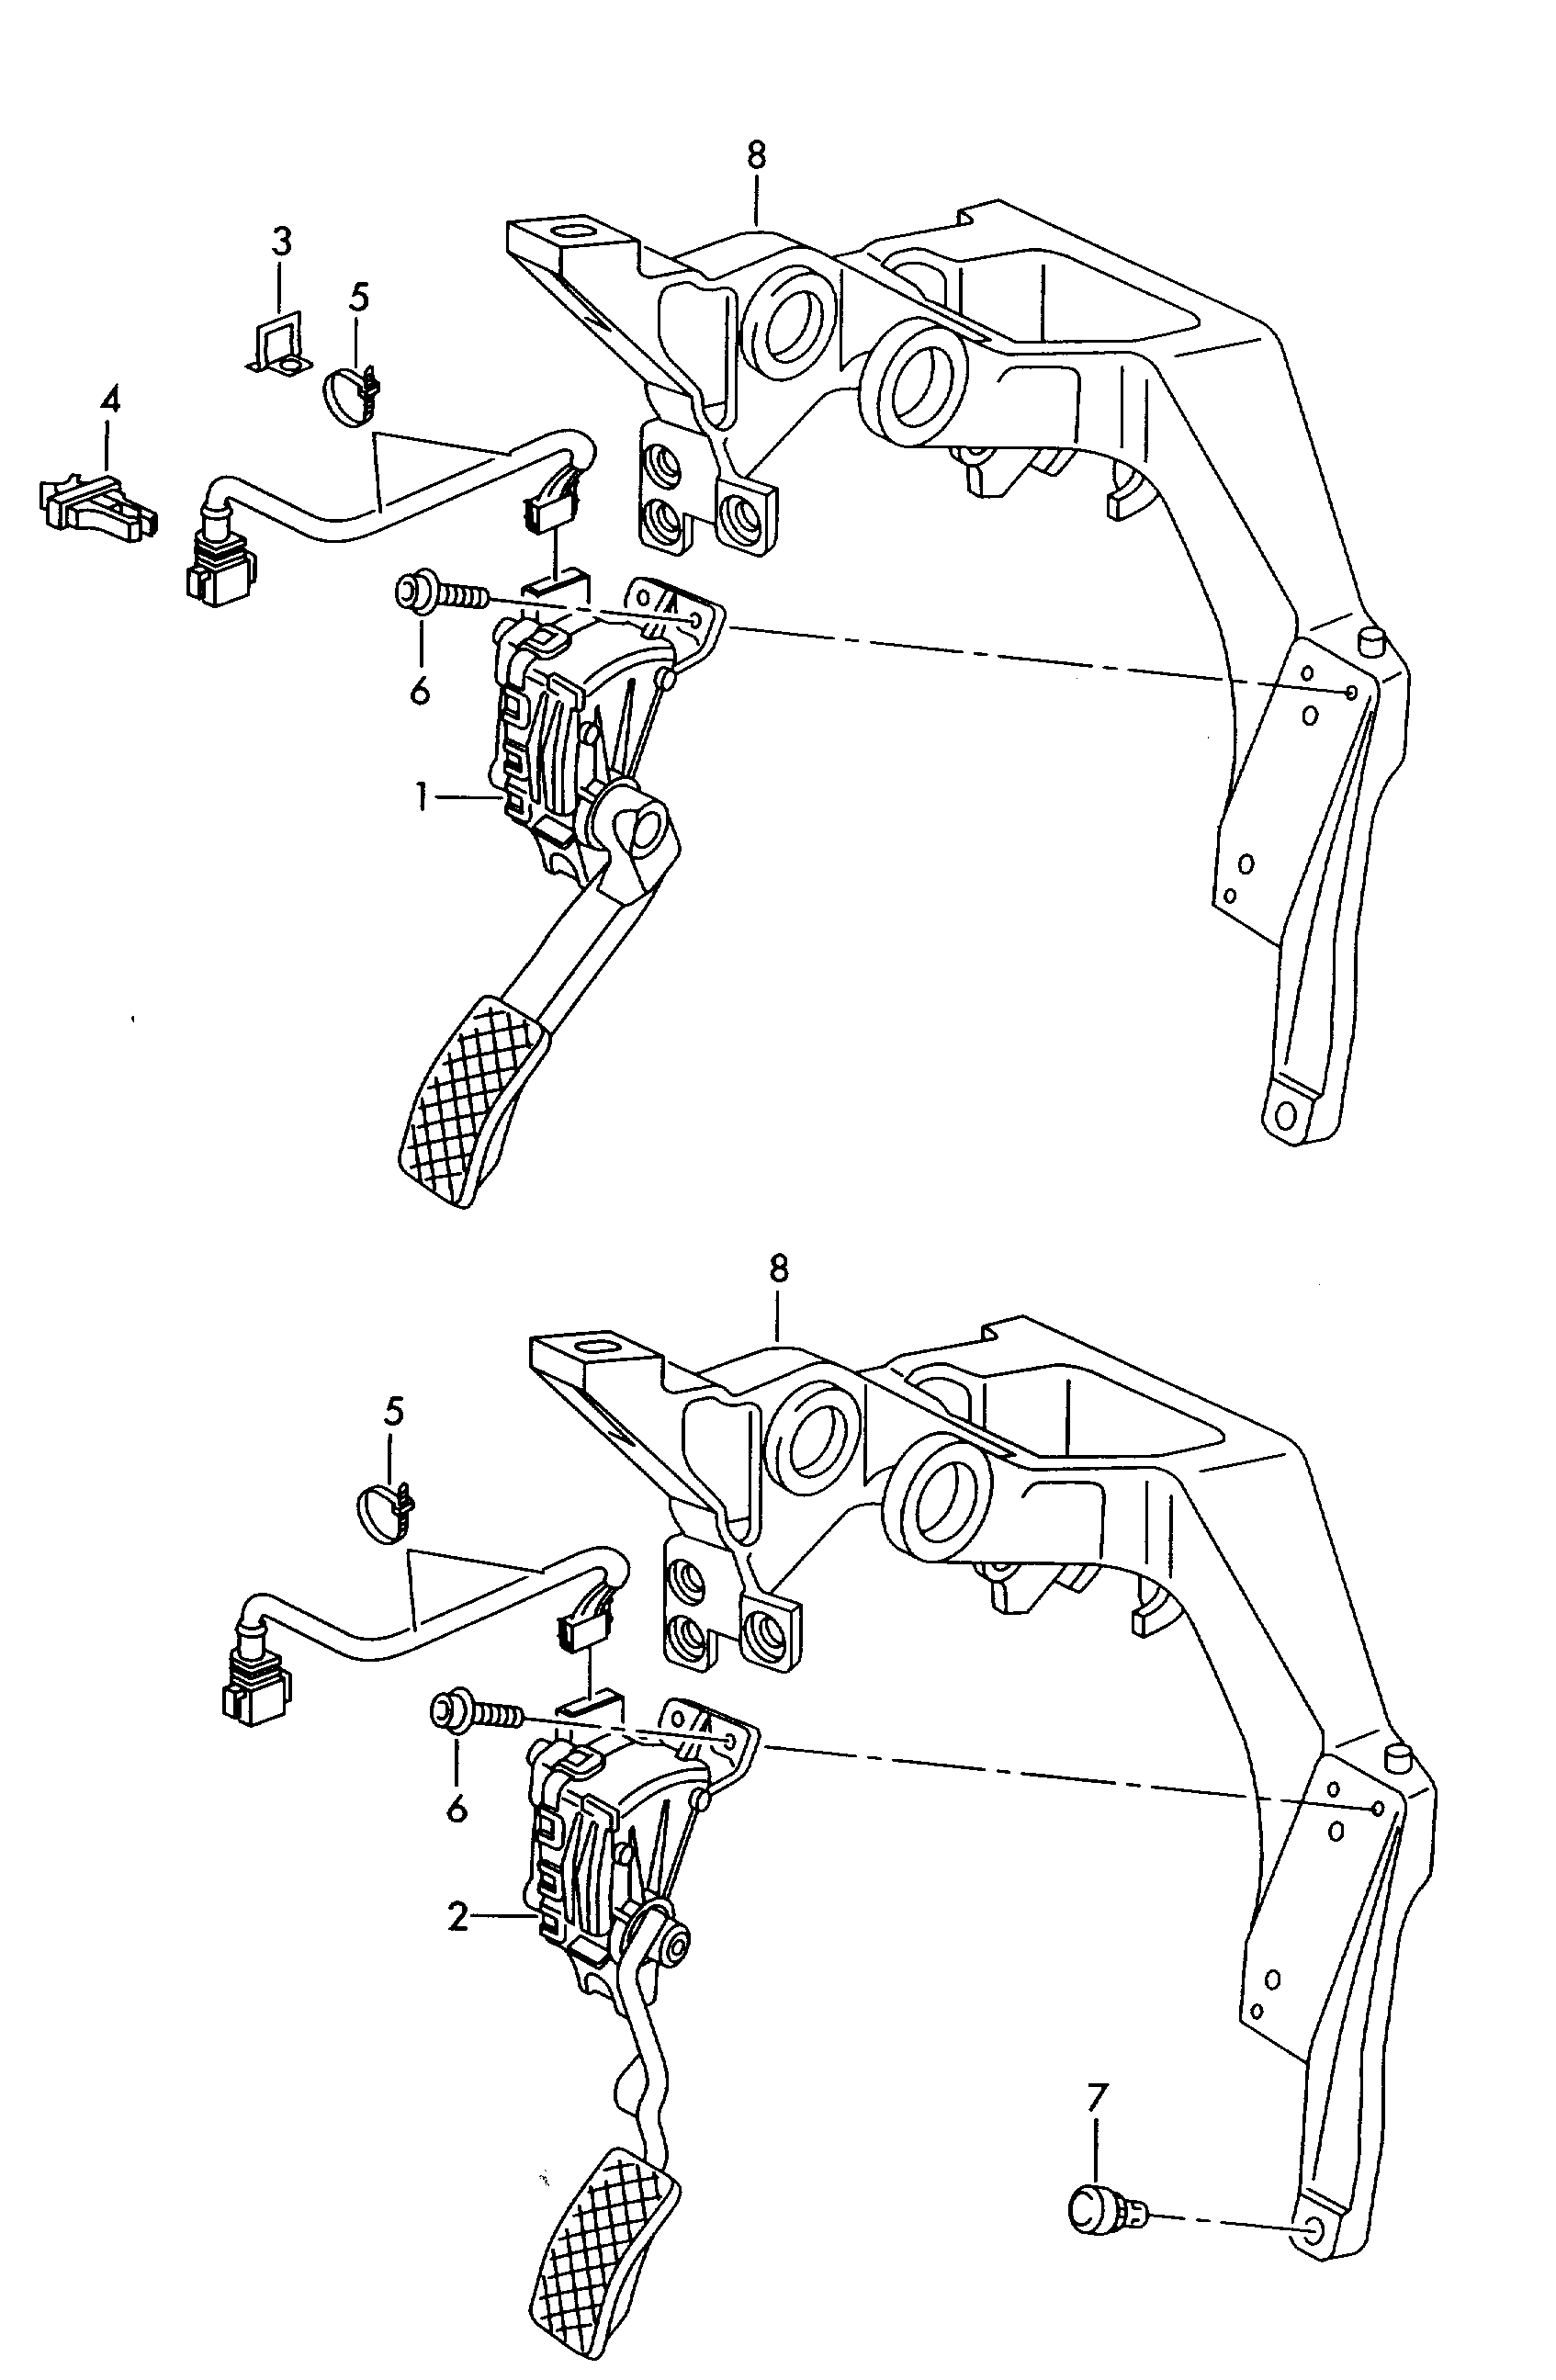 accelerator pedal with
electronic module - Audi A4/Avant(A4)  